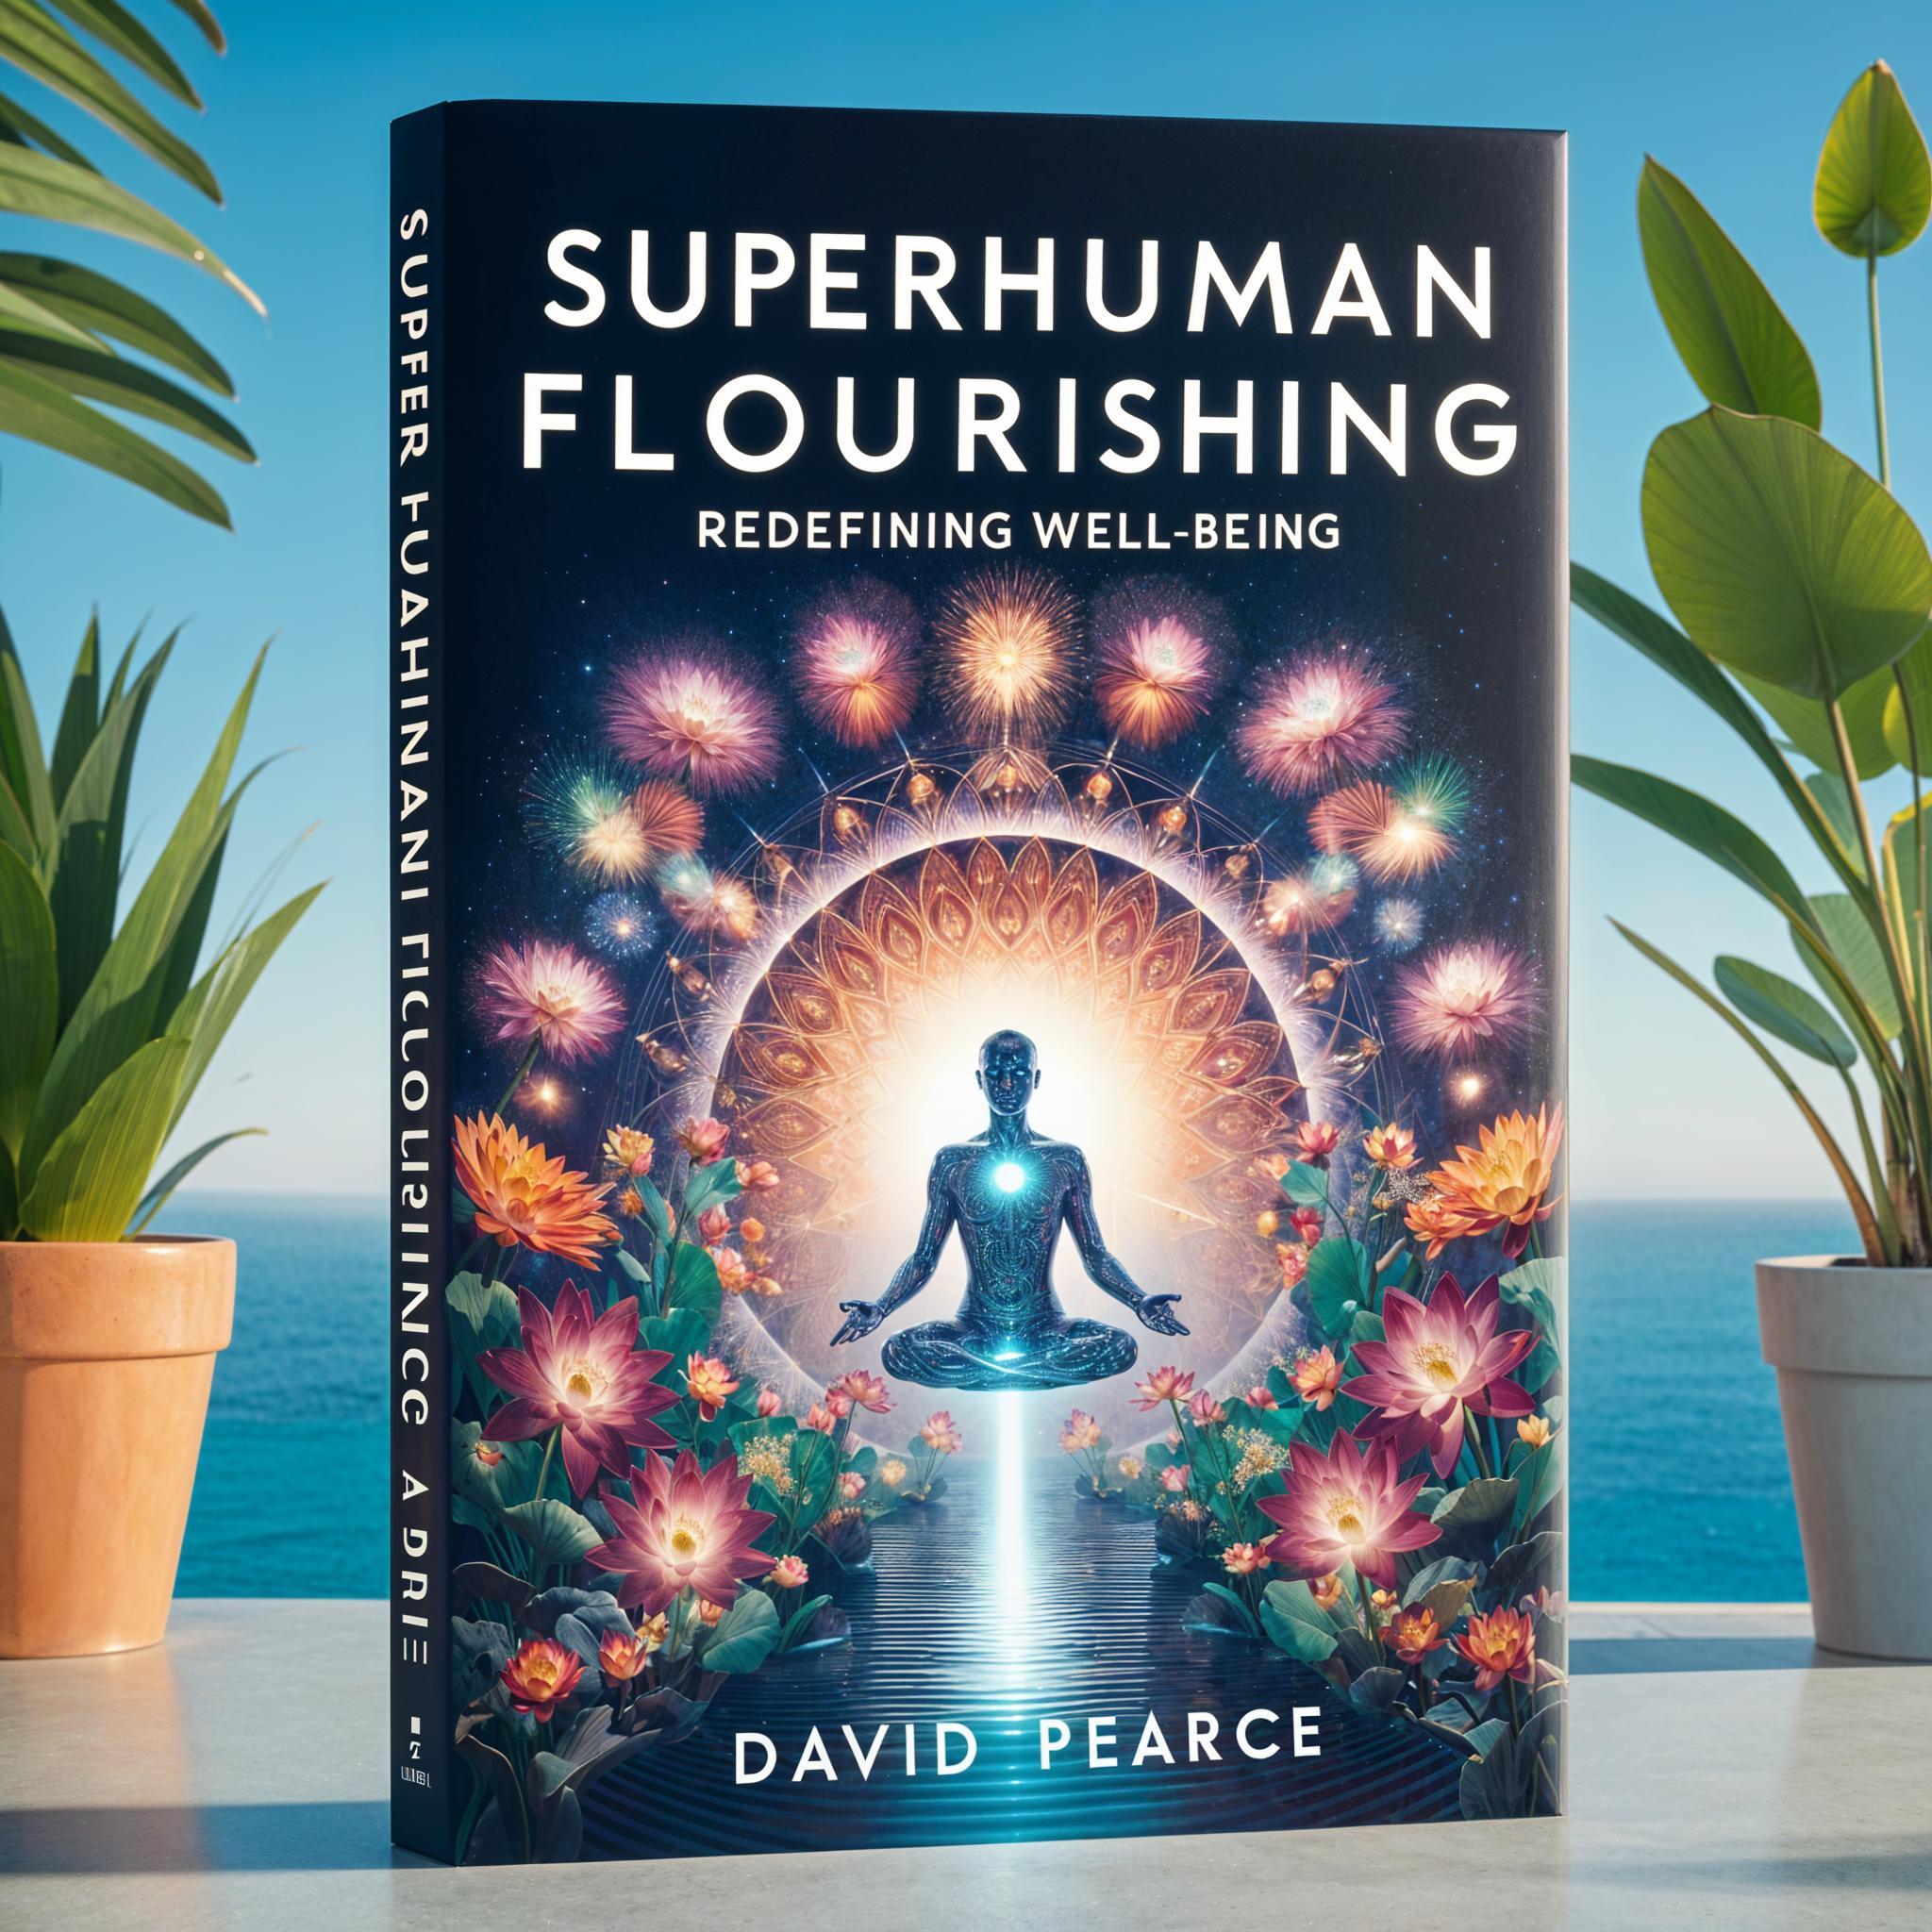 Superhuman Flourishing by David Pearce